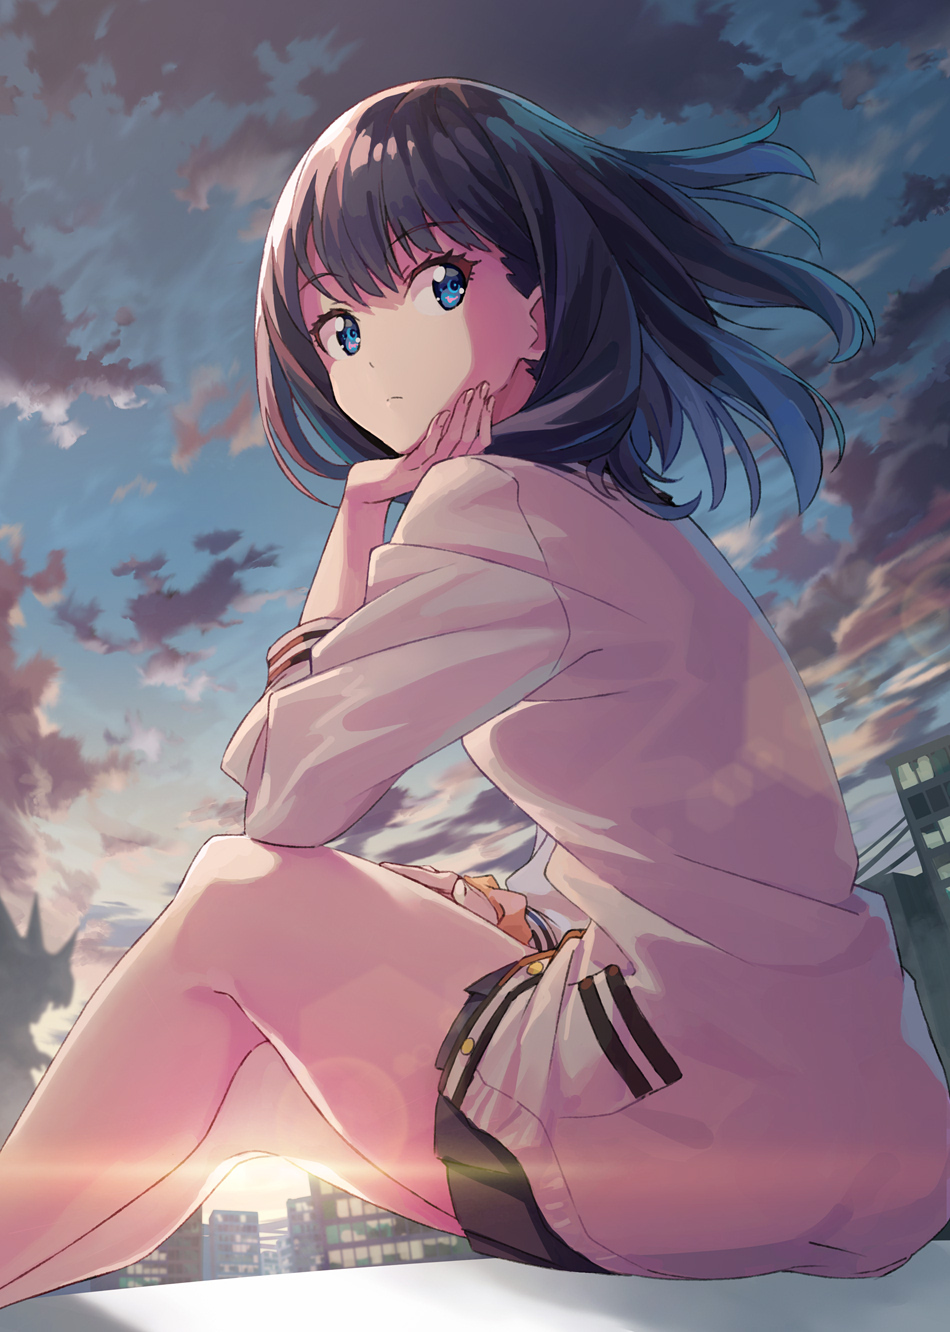 Anime 950x1332 anime anime girls blue eyes Takarada Rikka SSSS.GRIDMAN K-me dark hair sitting cityscape sky clouds